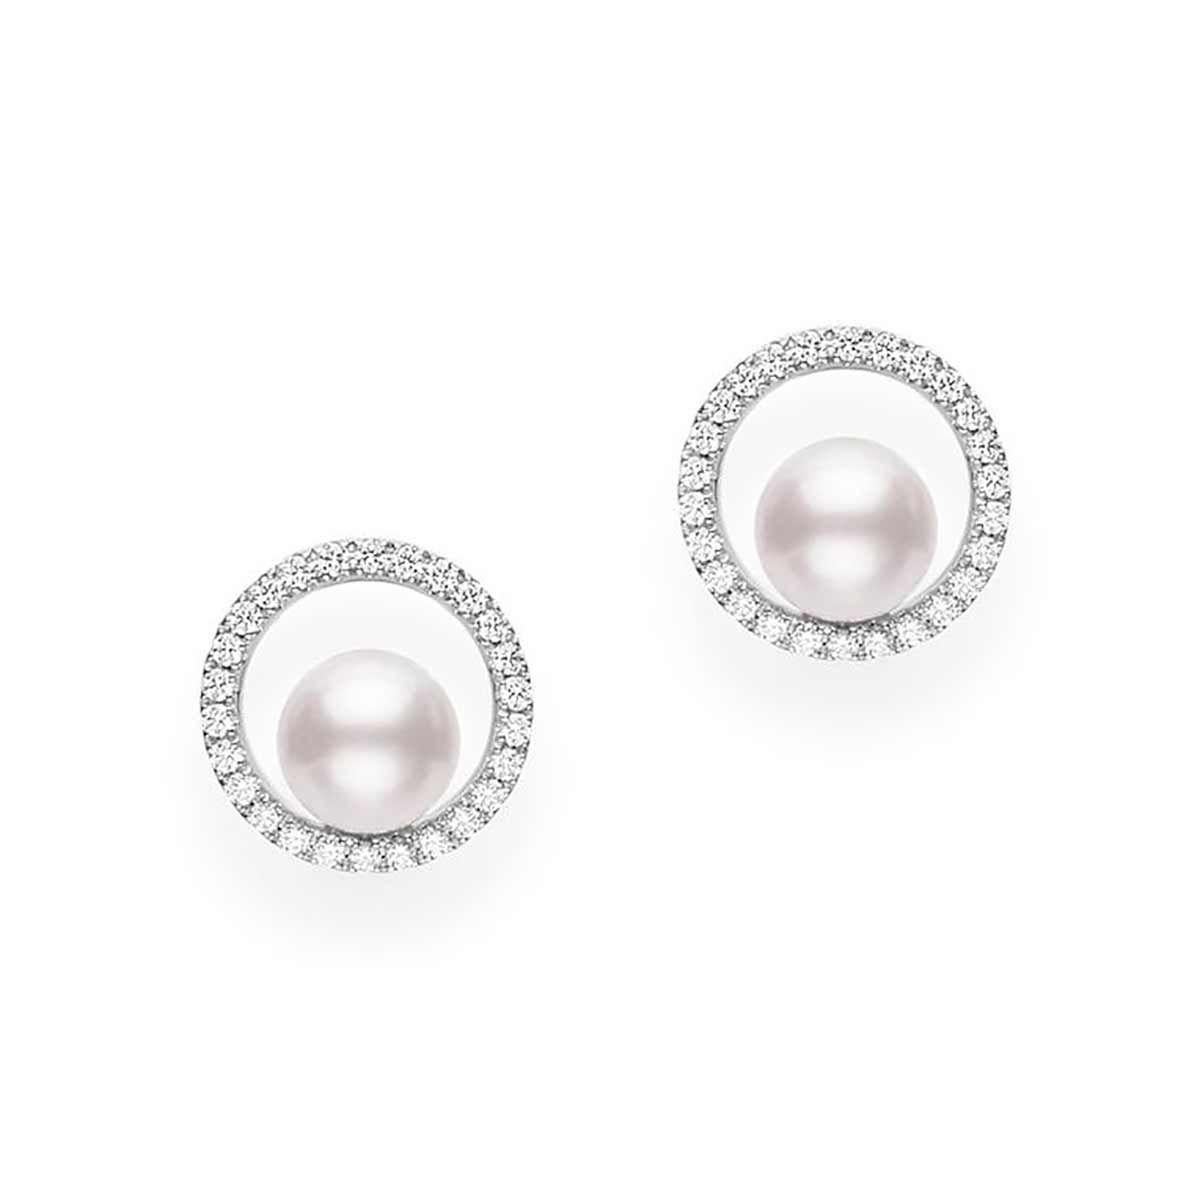 pearl earrings with diamonds